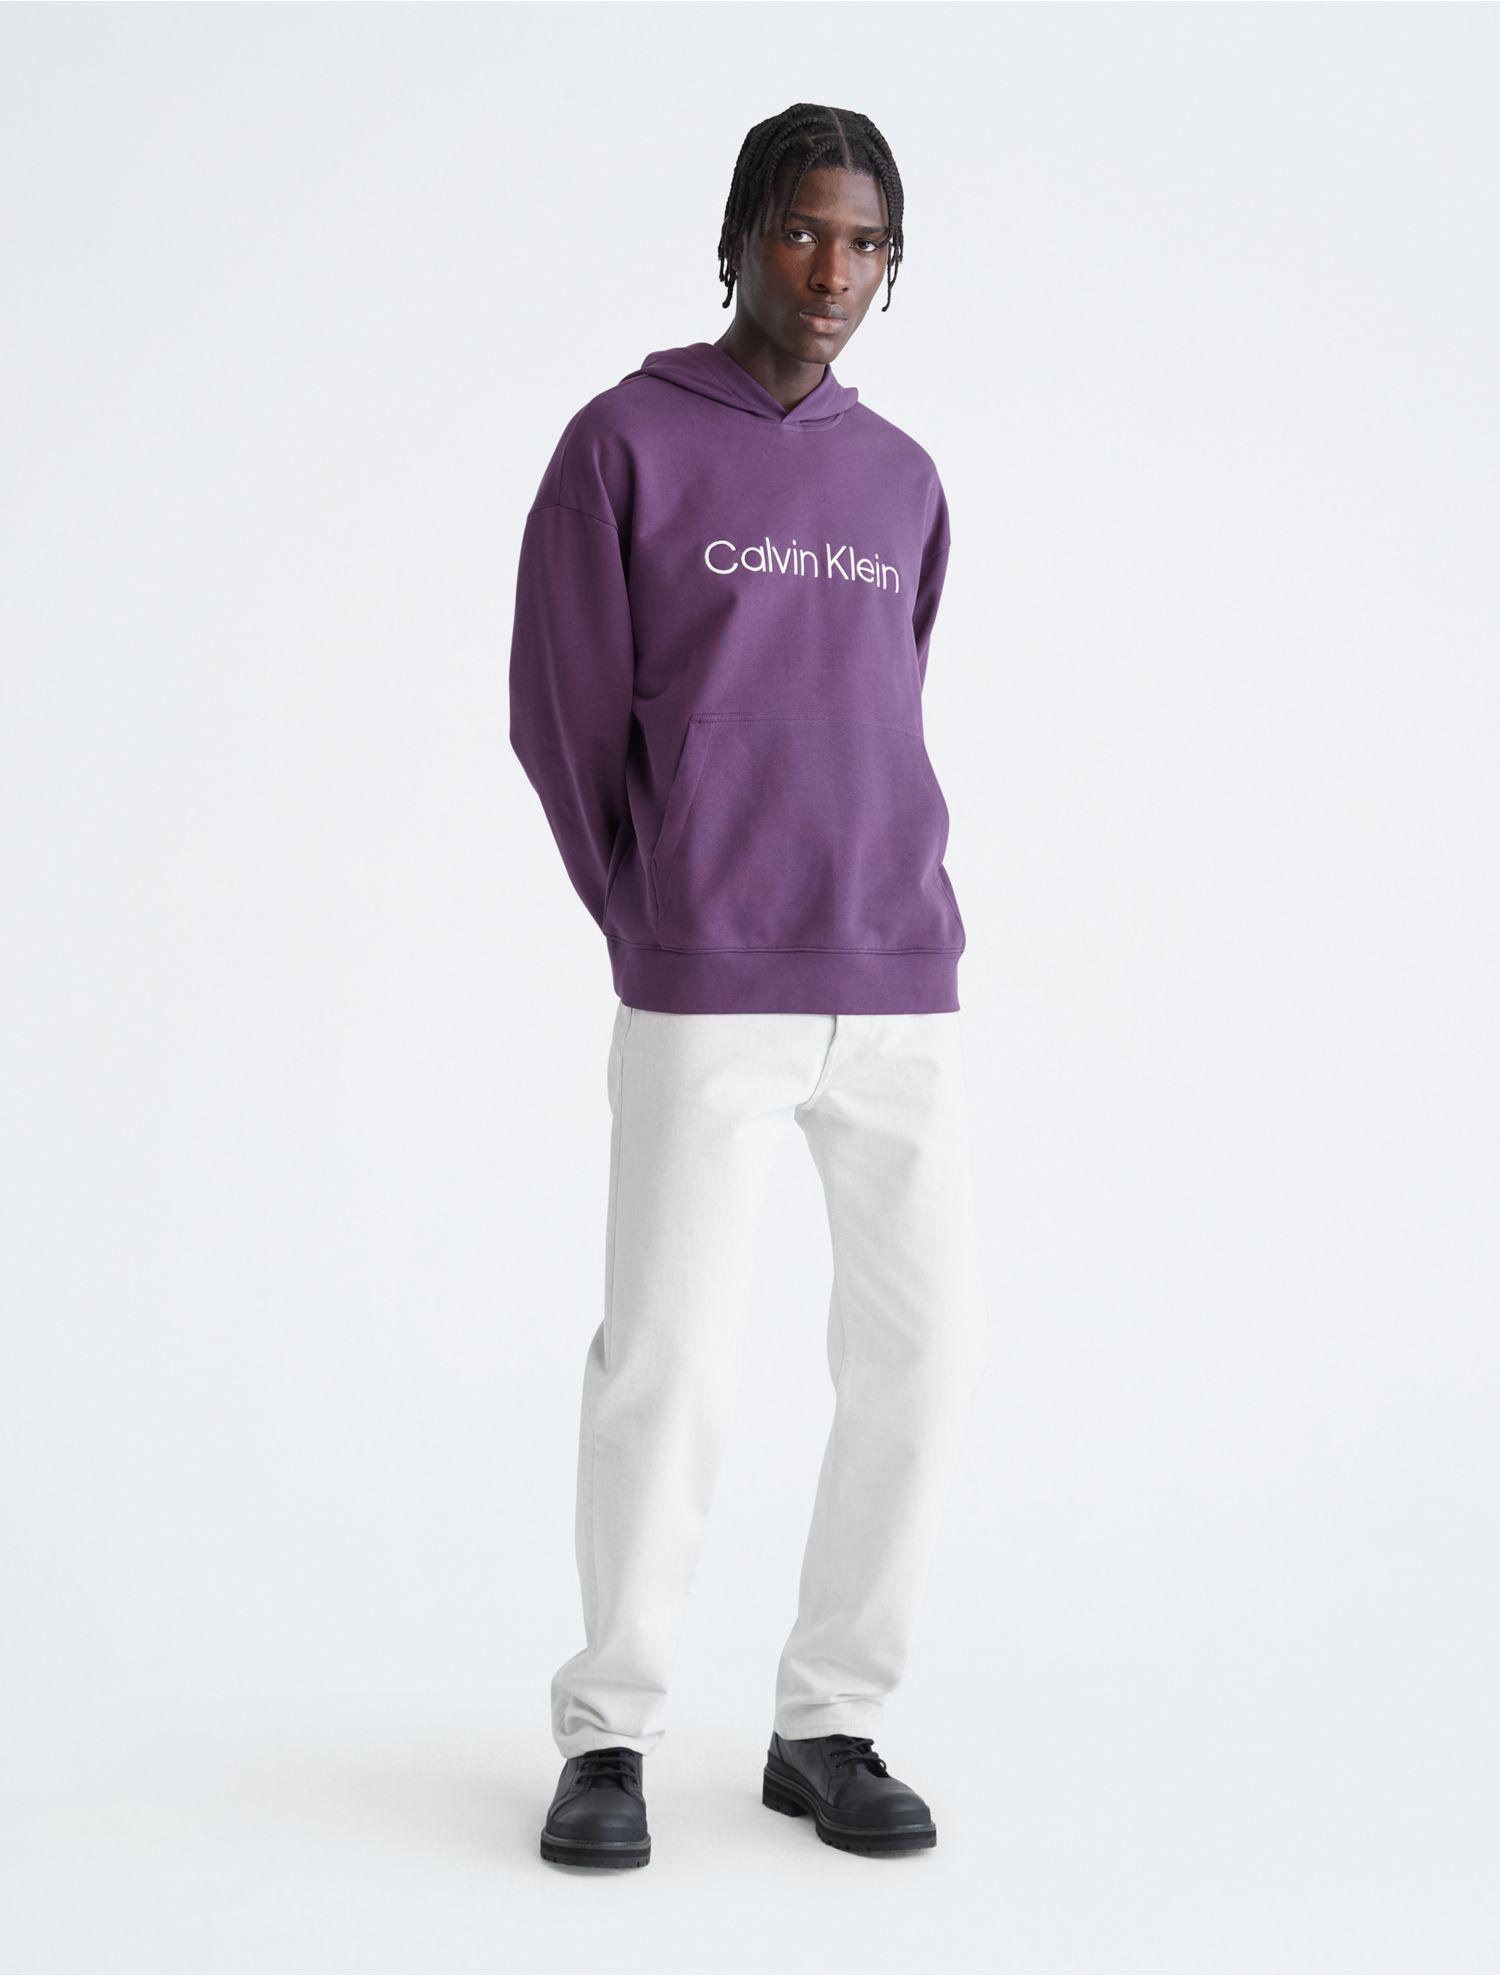 | for Hoodie in Logo Lyst Fit Purple Klein Calvin Relaxed Standard Men